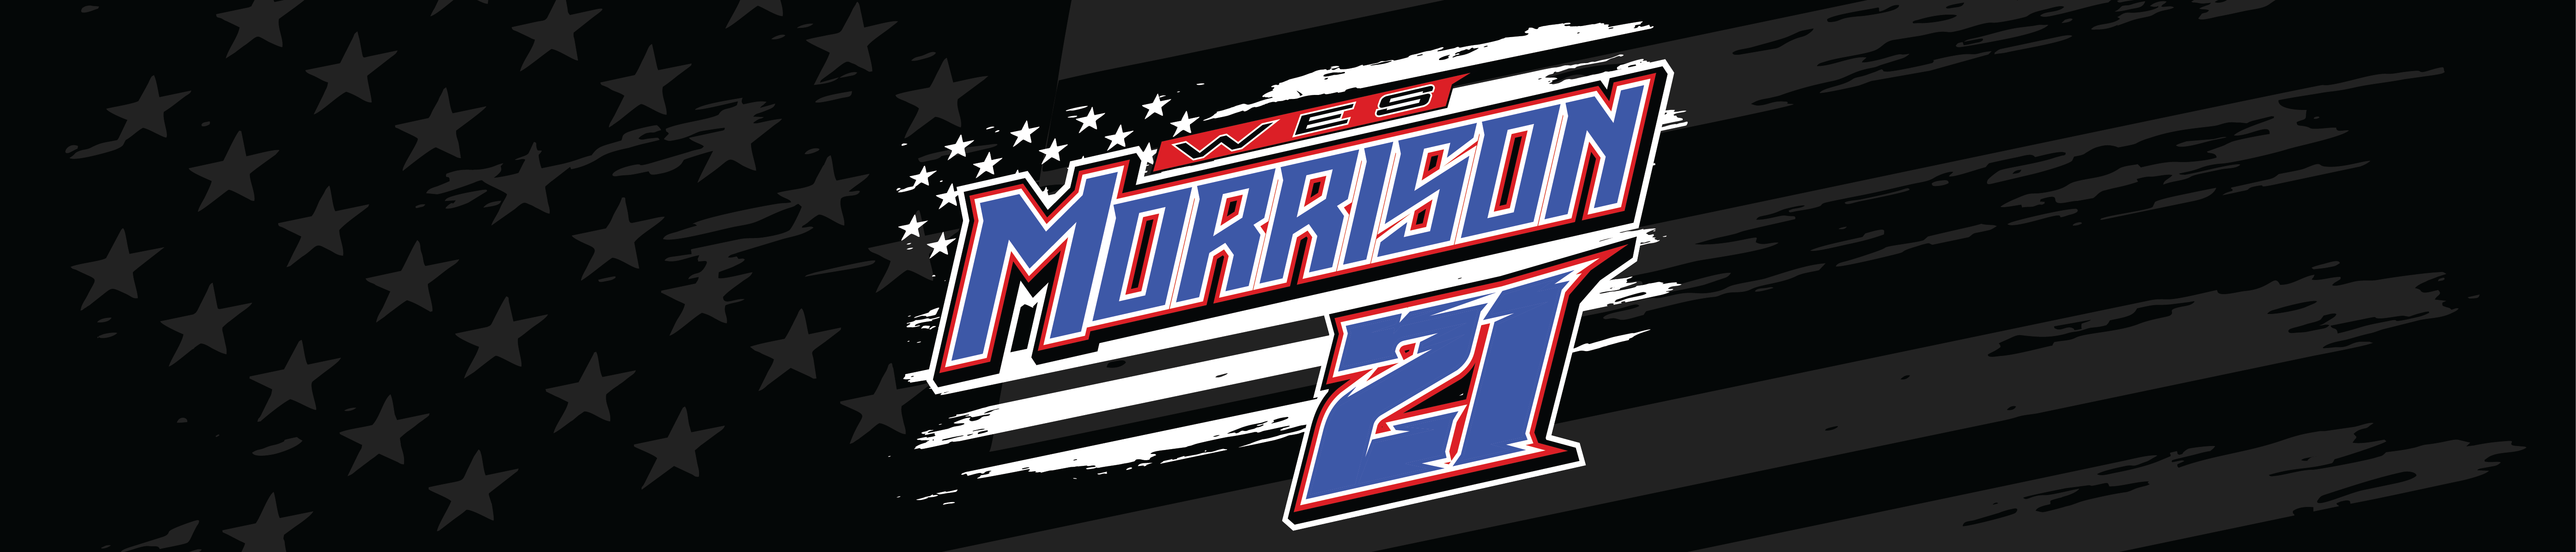 Wes Morrison Racing